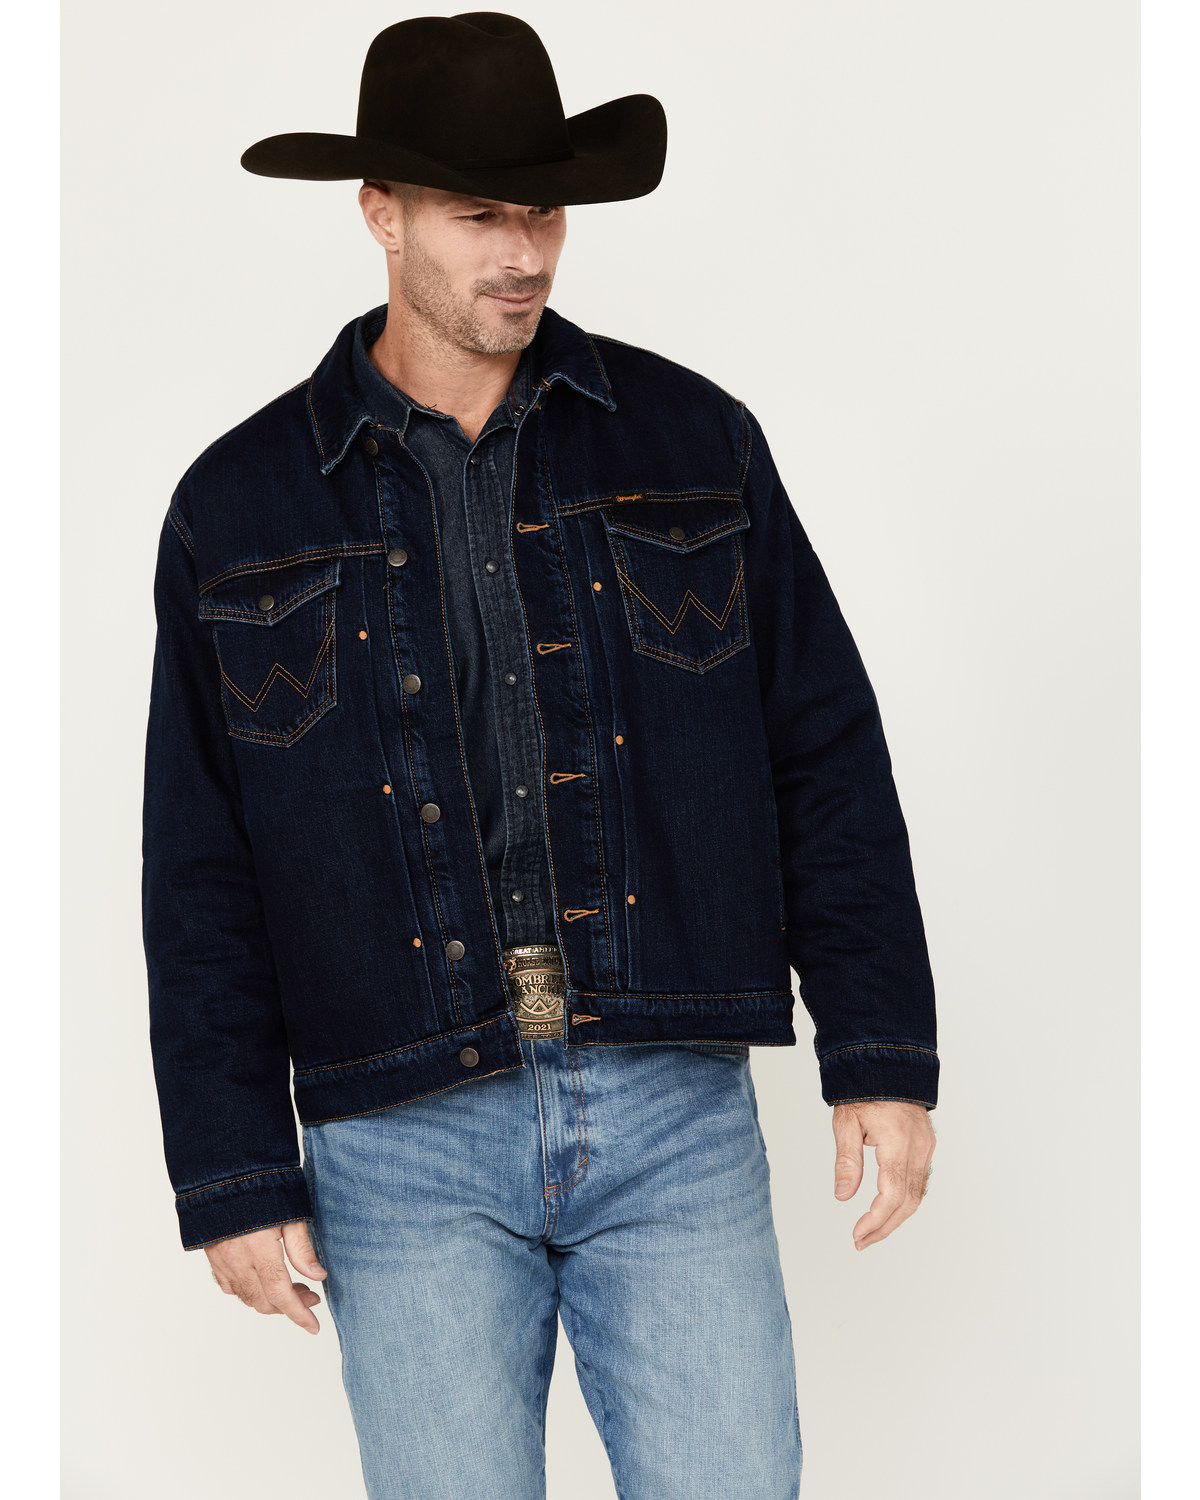 Wrangler Men's Vintage Sherpa Lined Trucker Jacket